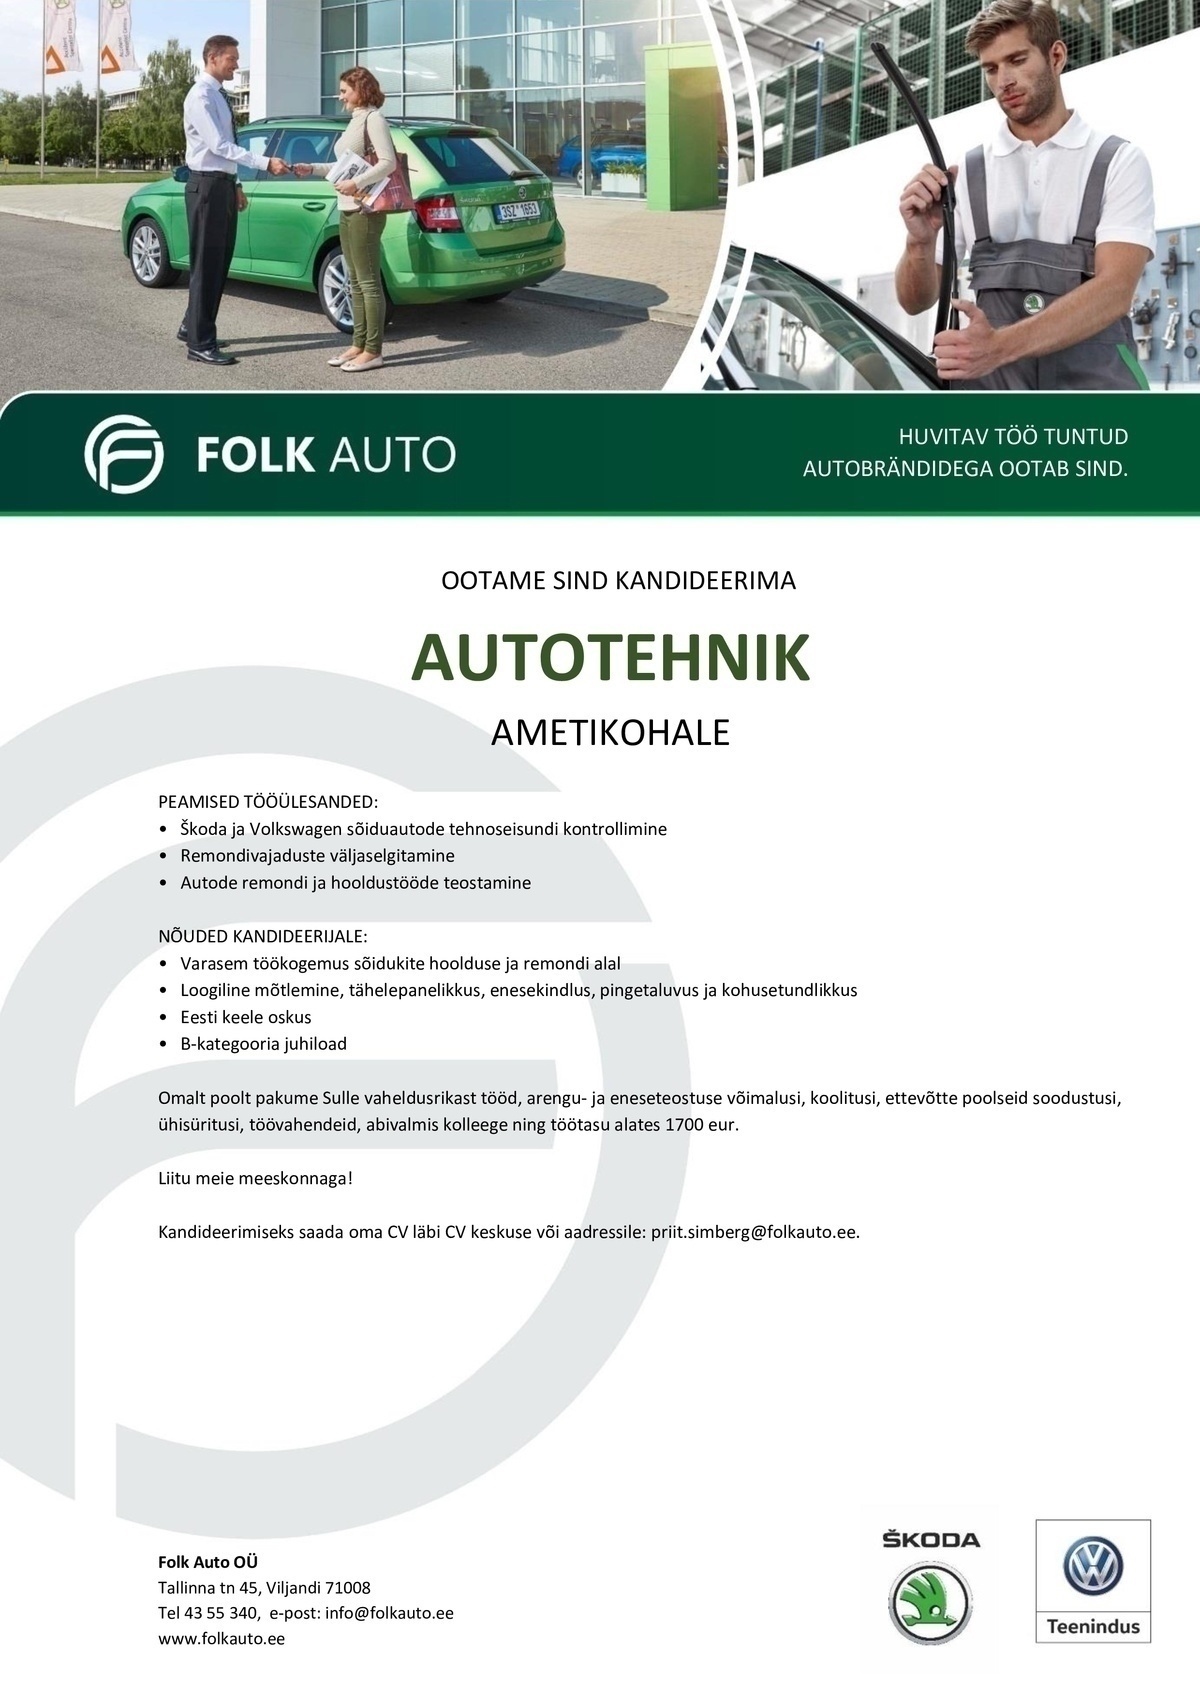 Folk Auto OÜ Autotehnik